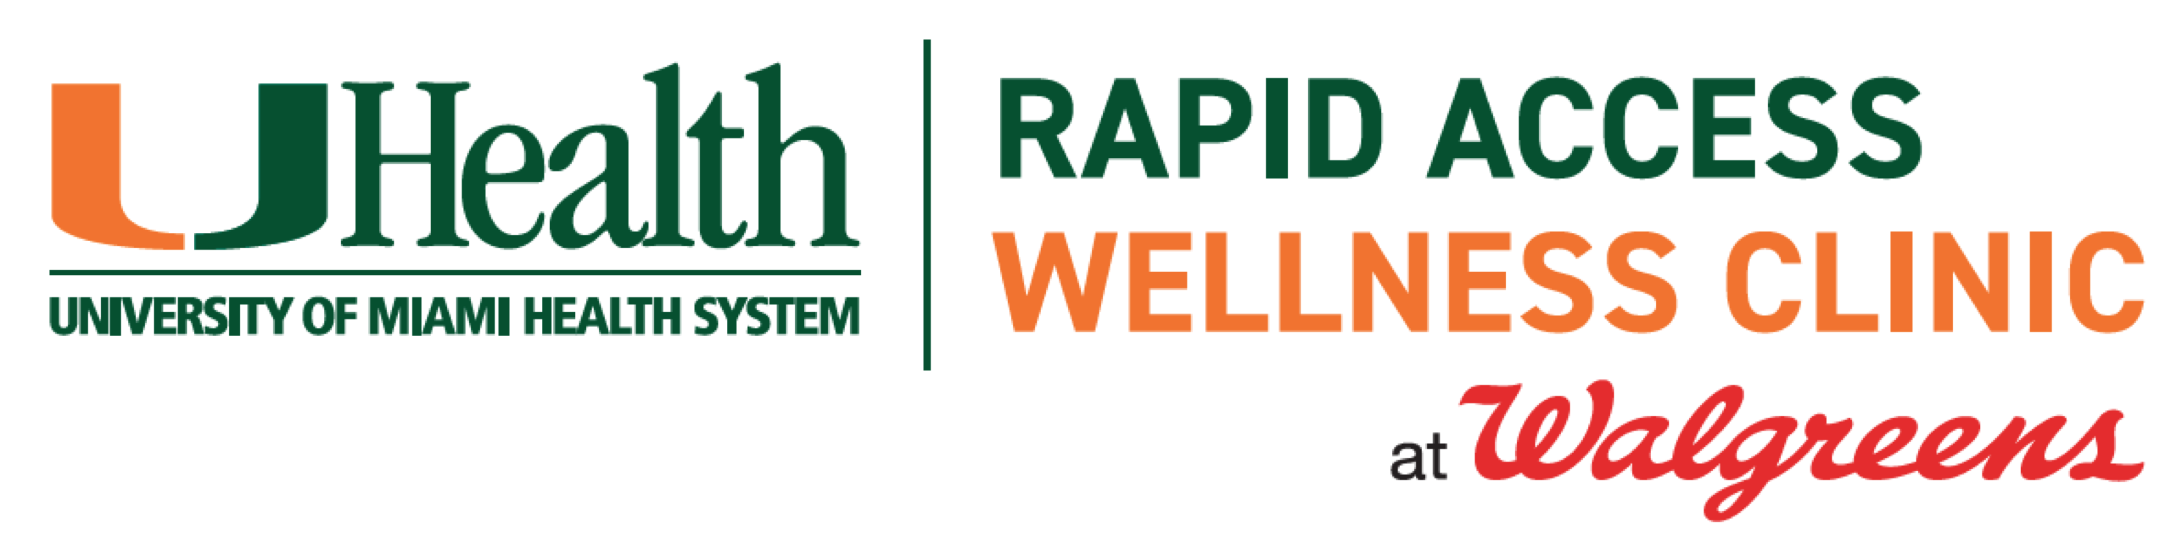 UHealth Rapid Access Wellness Clinic